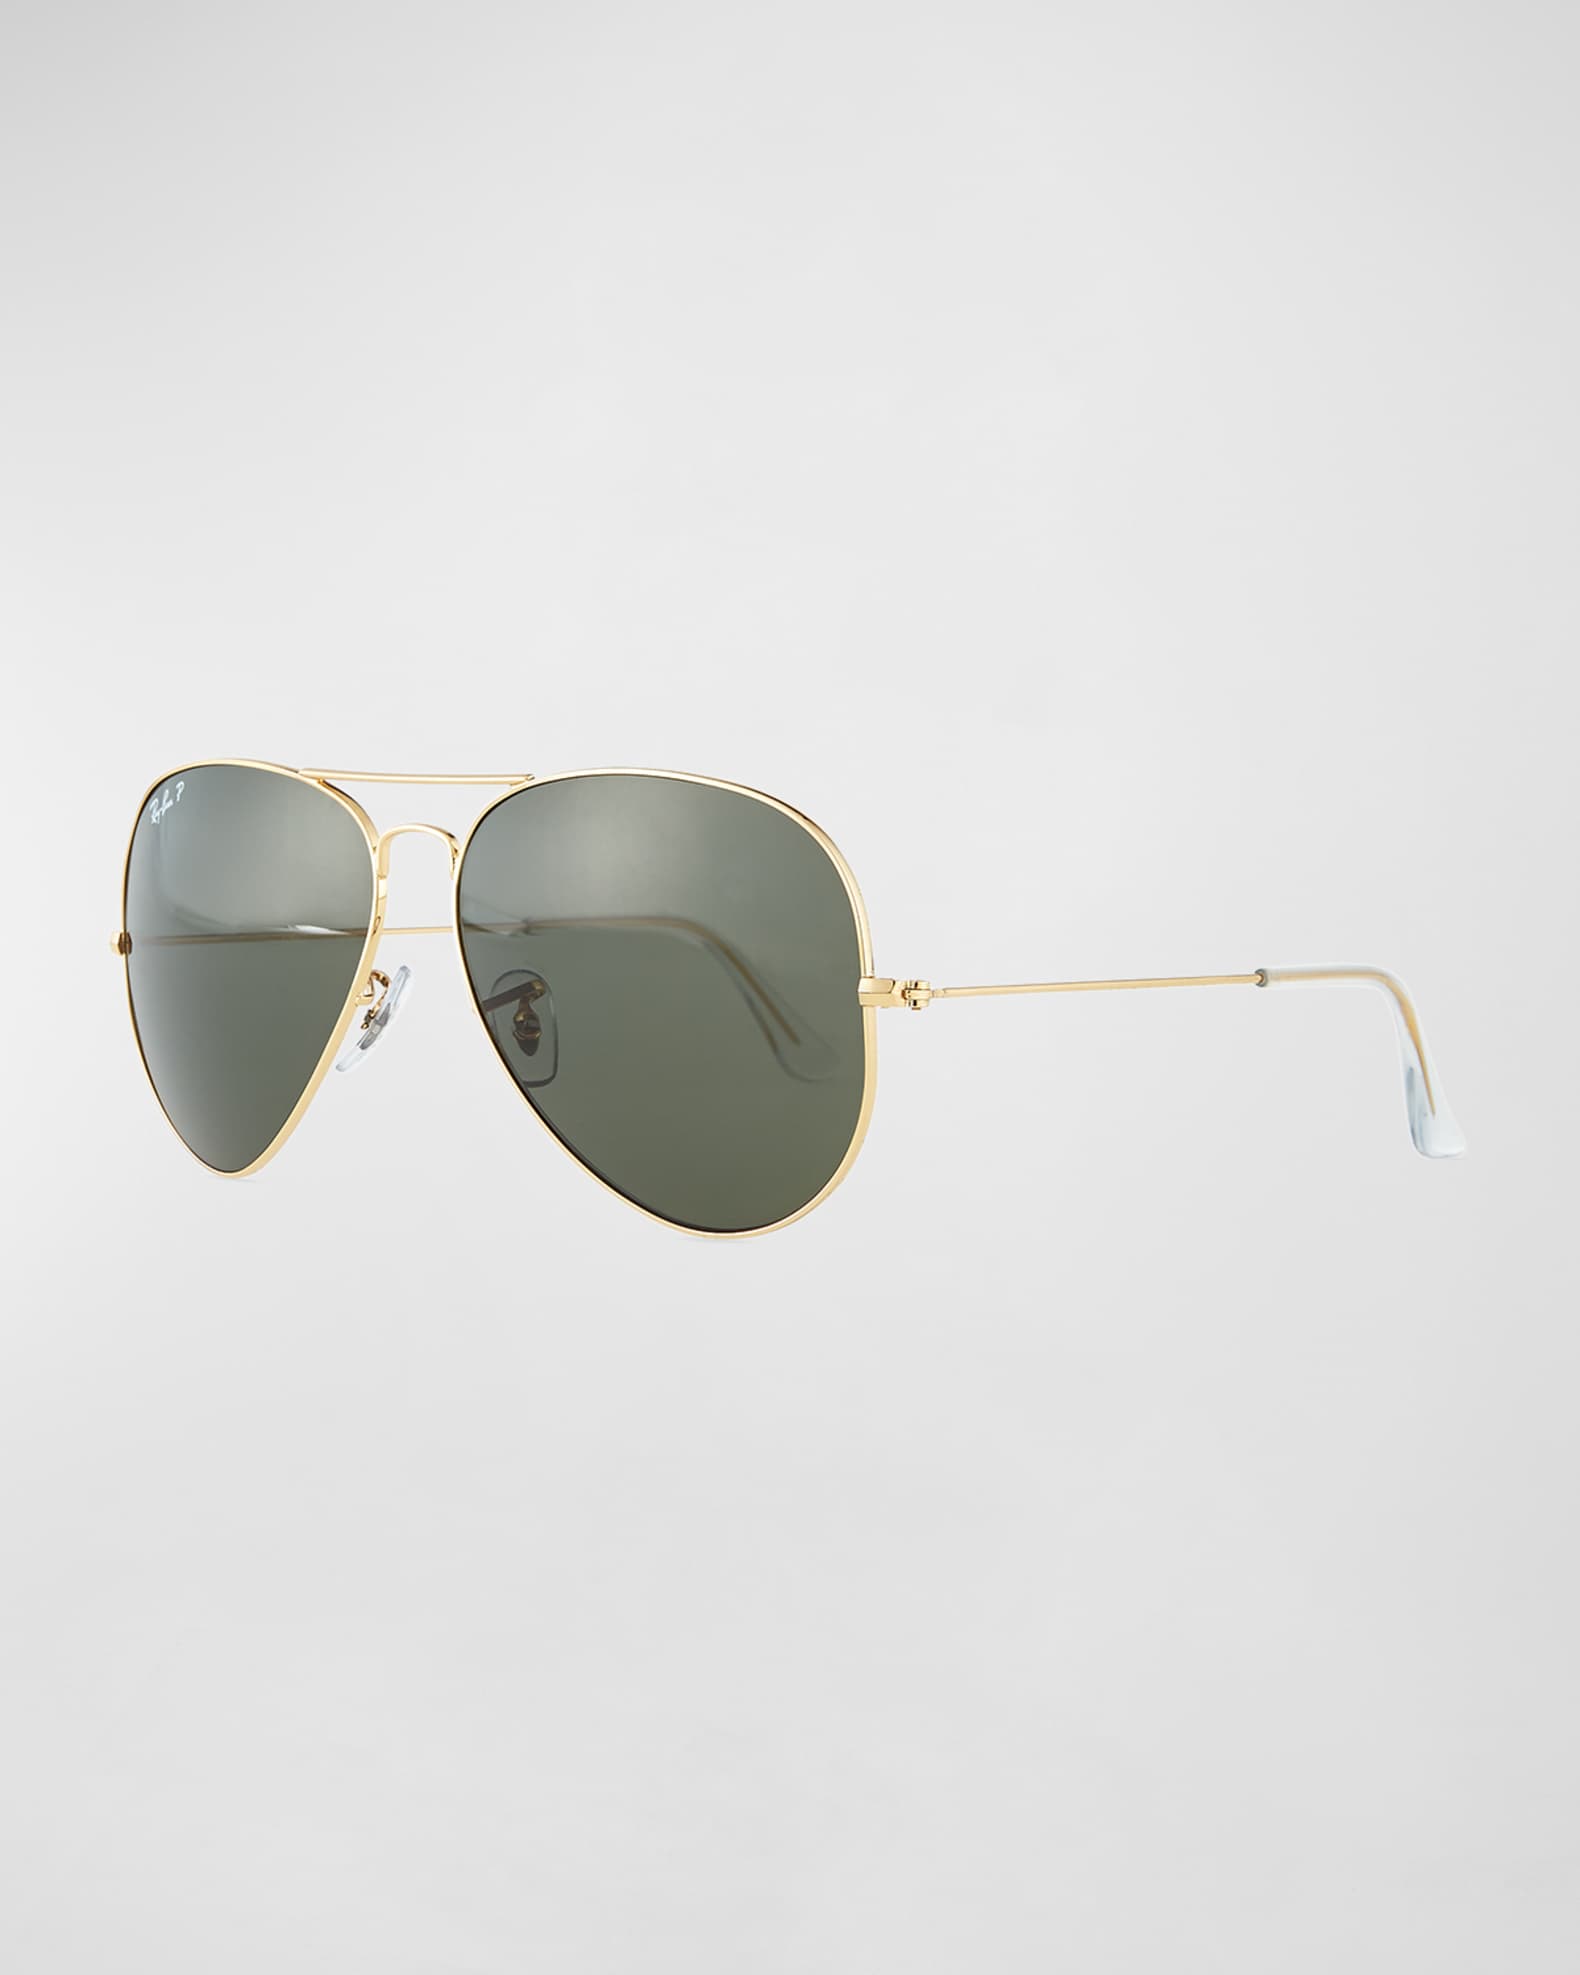 Ray-Ban Original Aviator Polarized Sunglasses, Gold/Green | Neiman Marcus